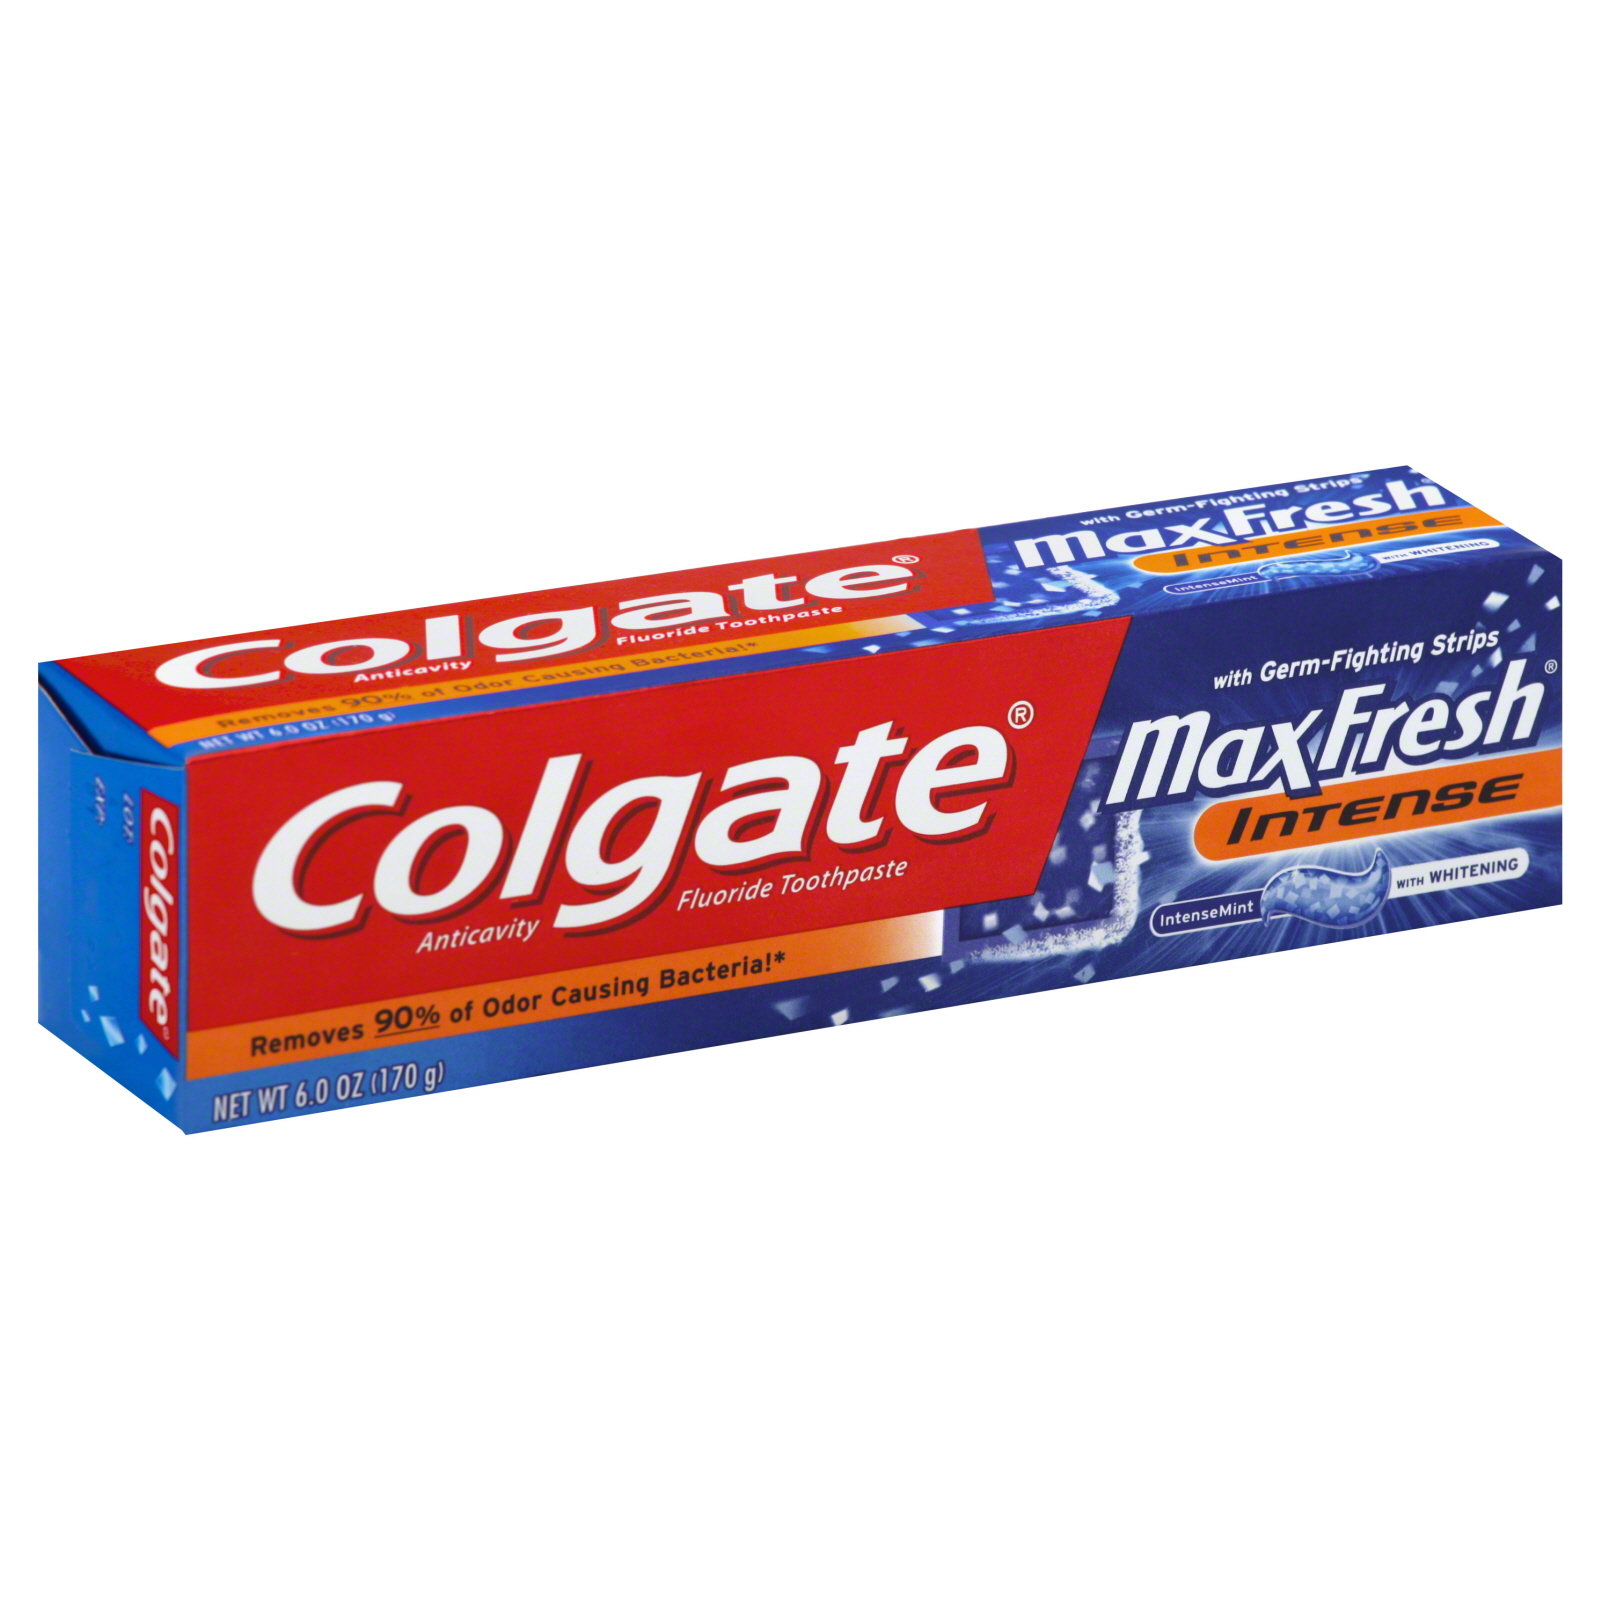 Colgate-Palmolive MaxFresh Toothpaste, Anticavity Fluoride, with Whitening, Intense Mint, 6 oz (170 g)